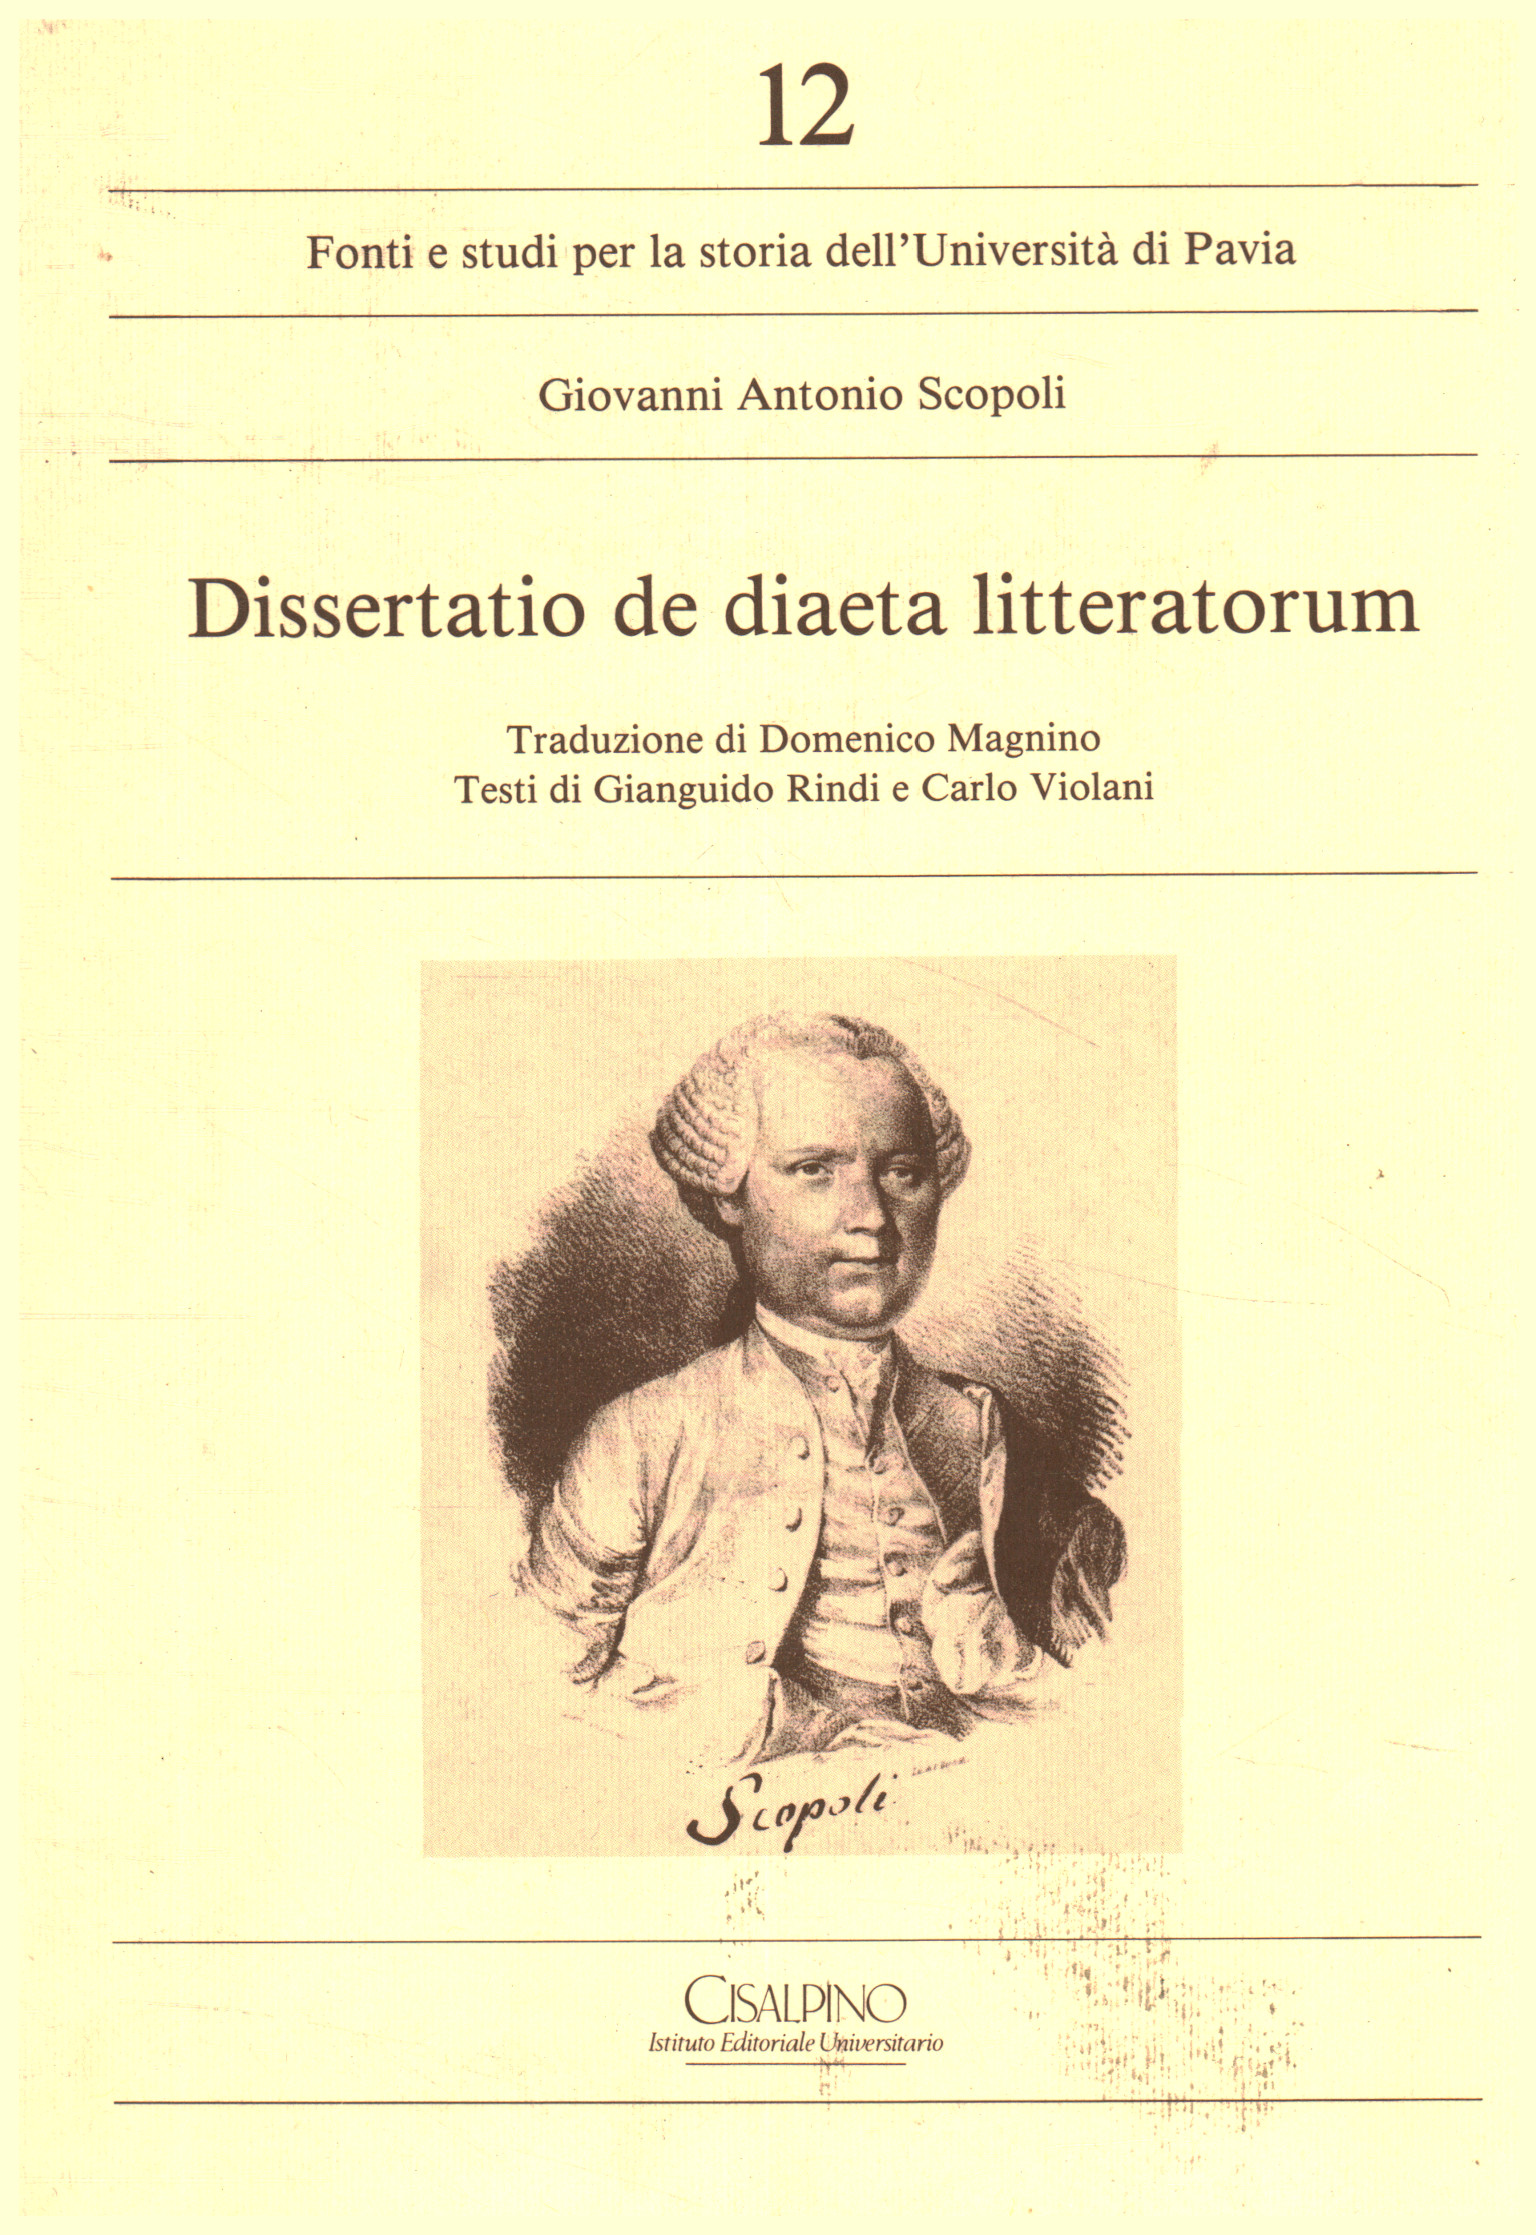 Dissertation de diaeta litteratorum